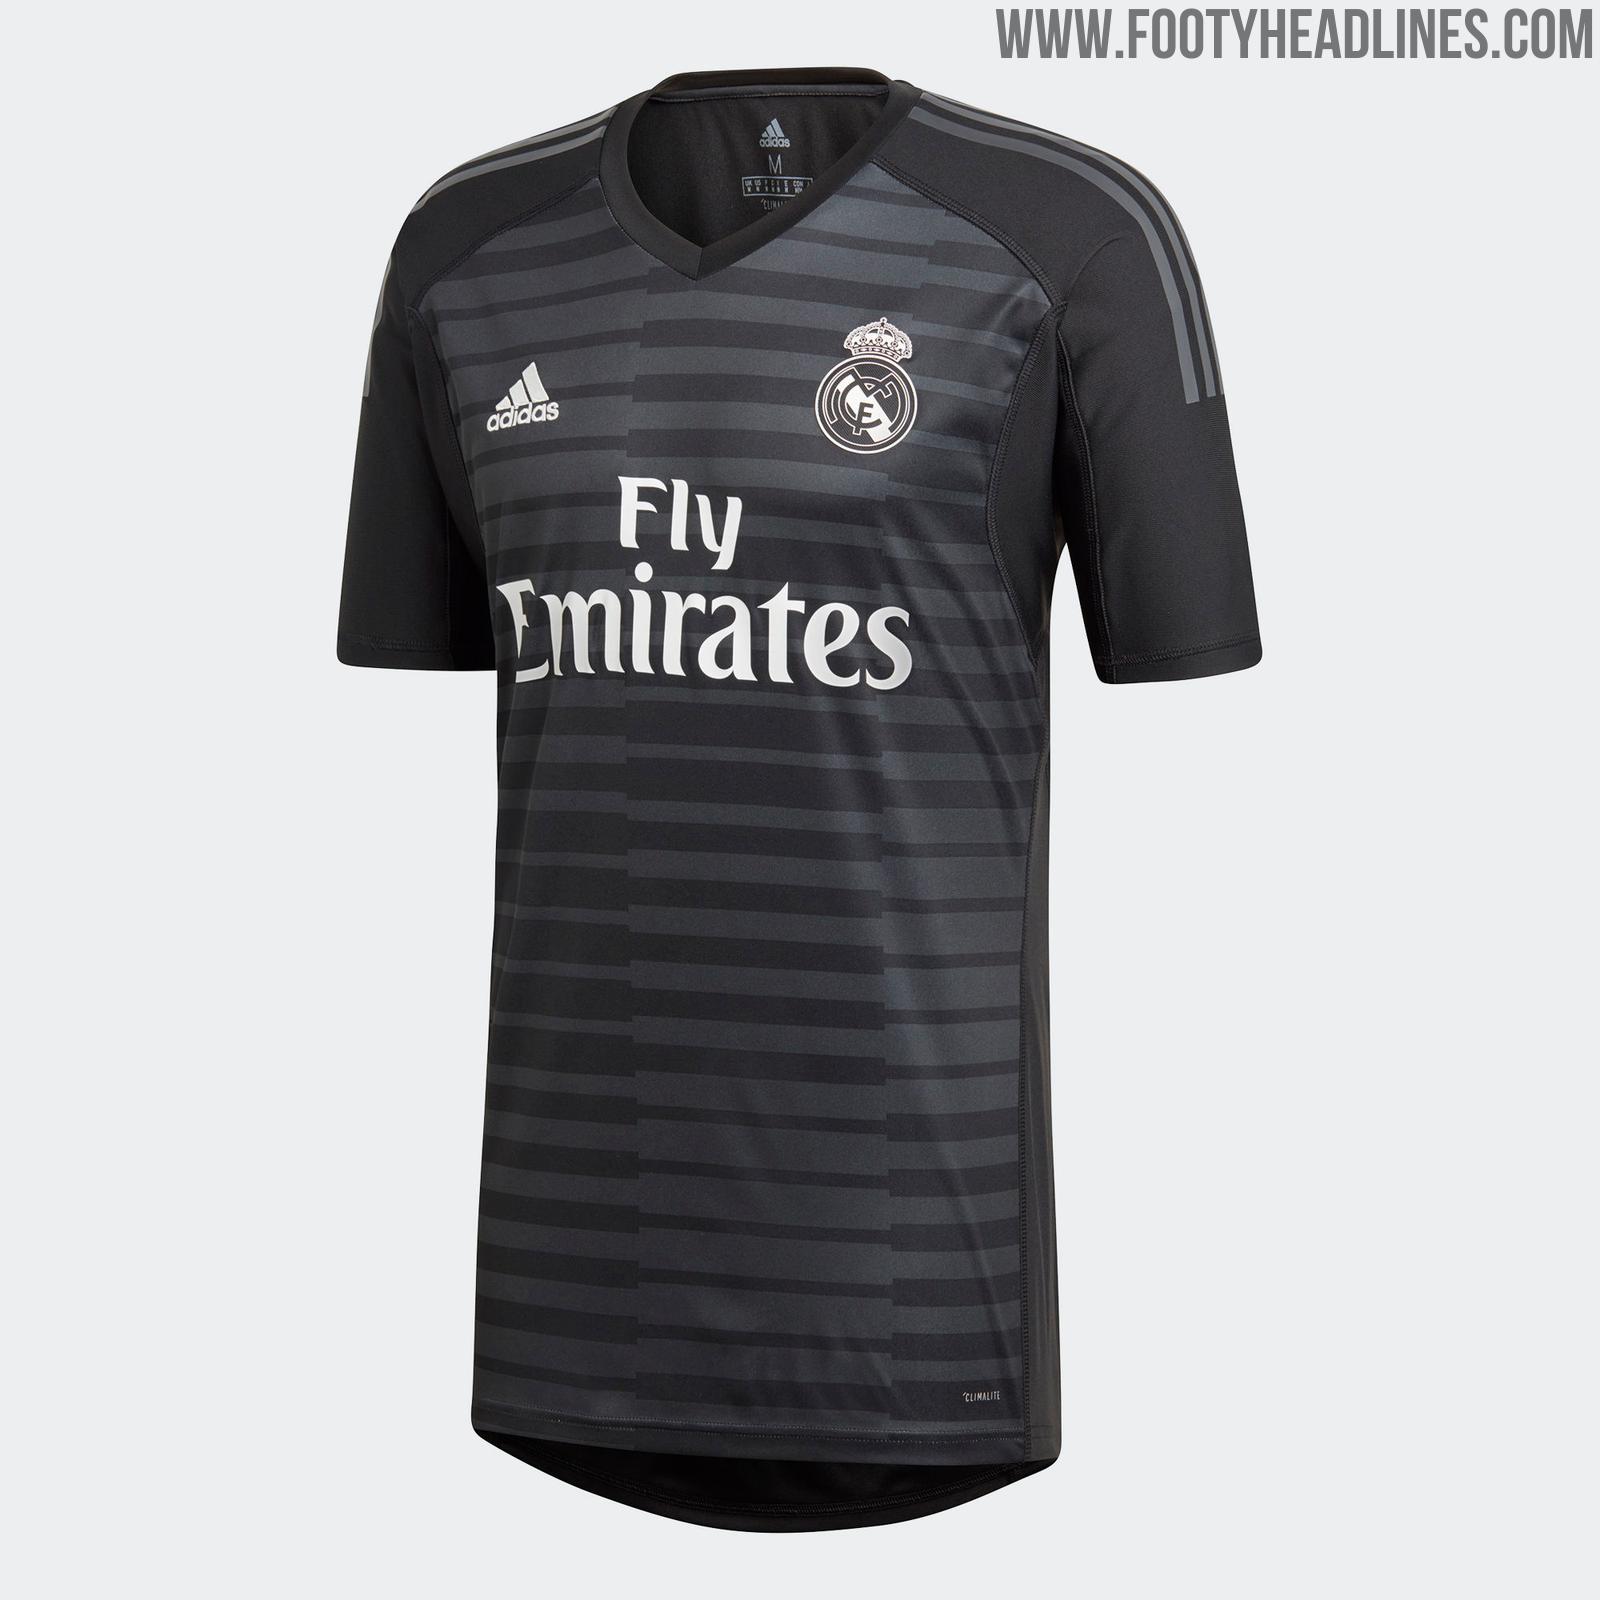 Real Madrid 18-19 Goalkeeper Home & Away Kits Released ...